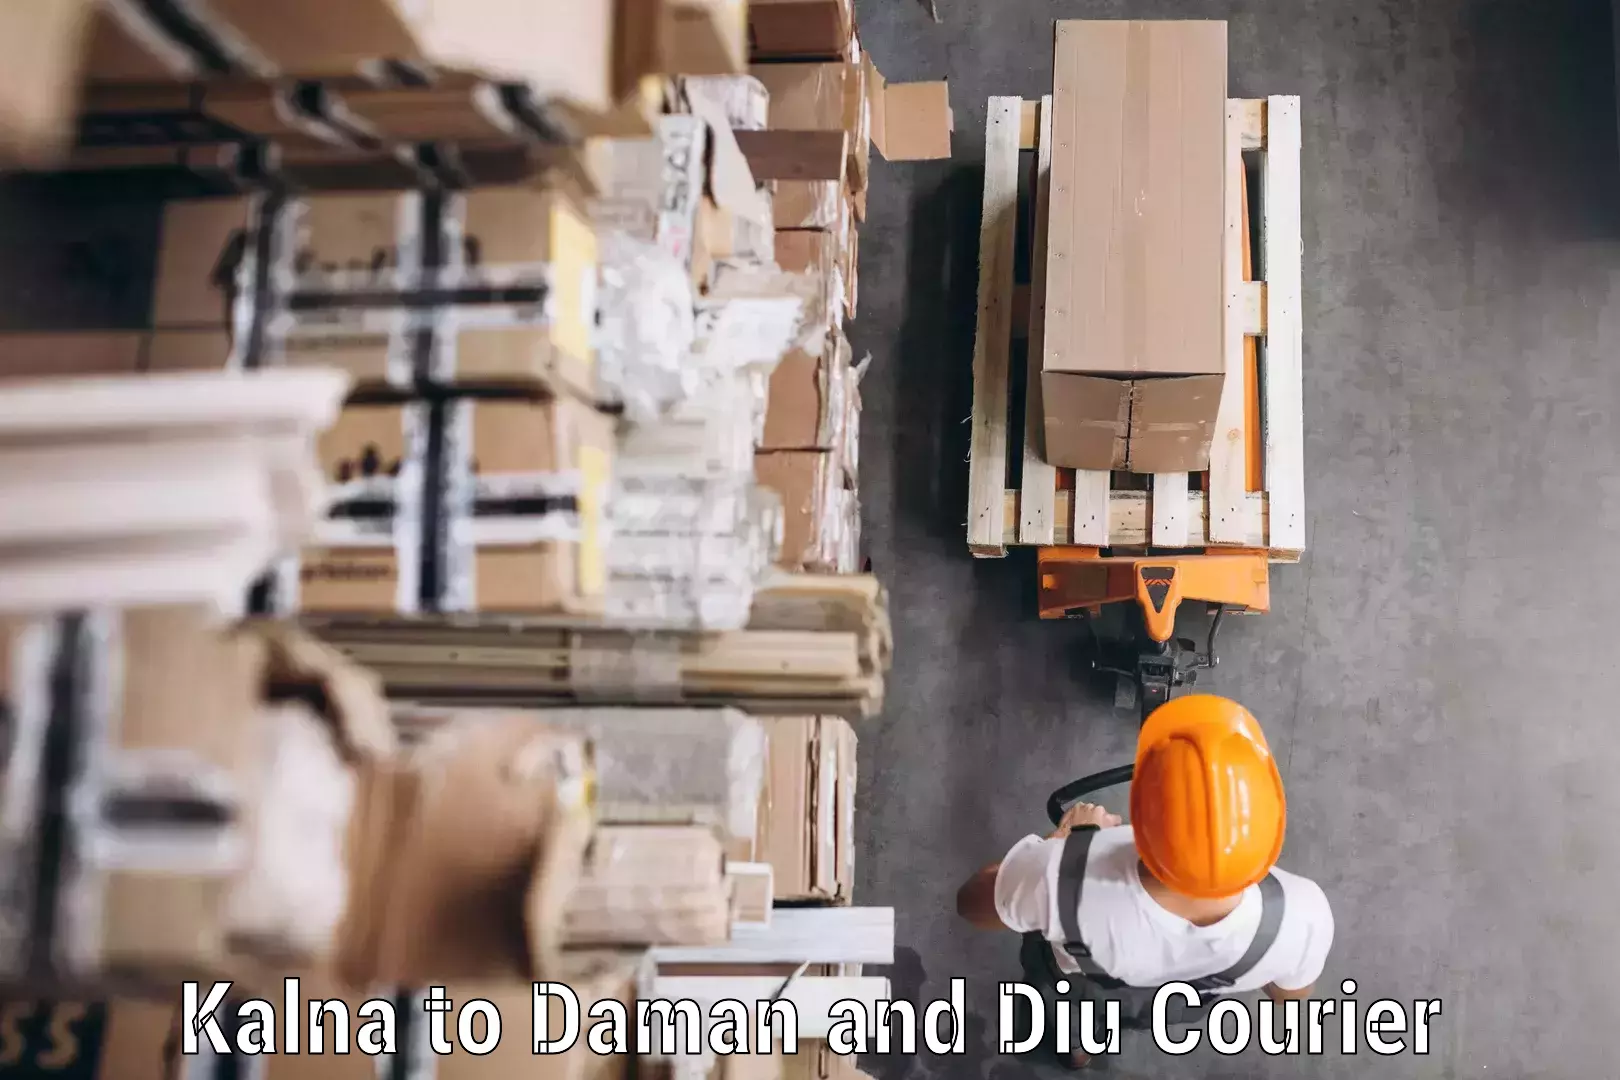 Professional courier handling Kalna to Daman and Diu